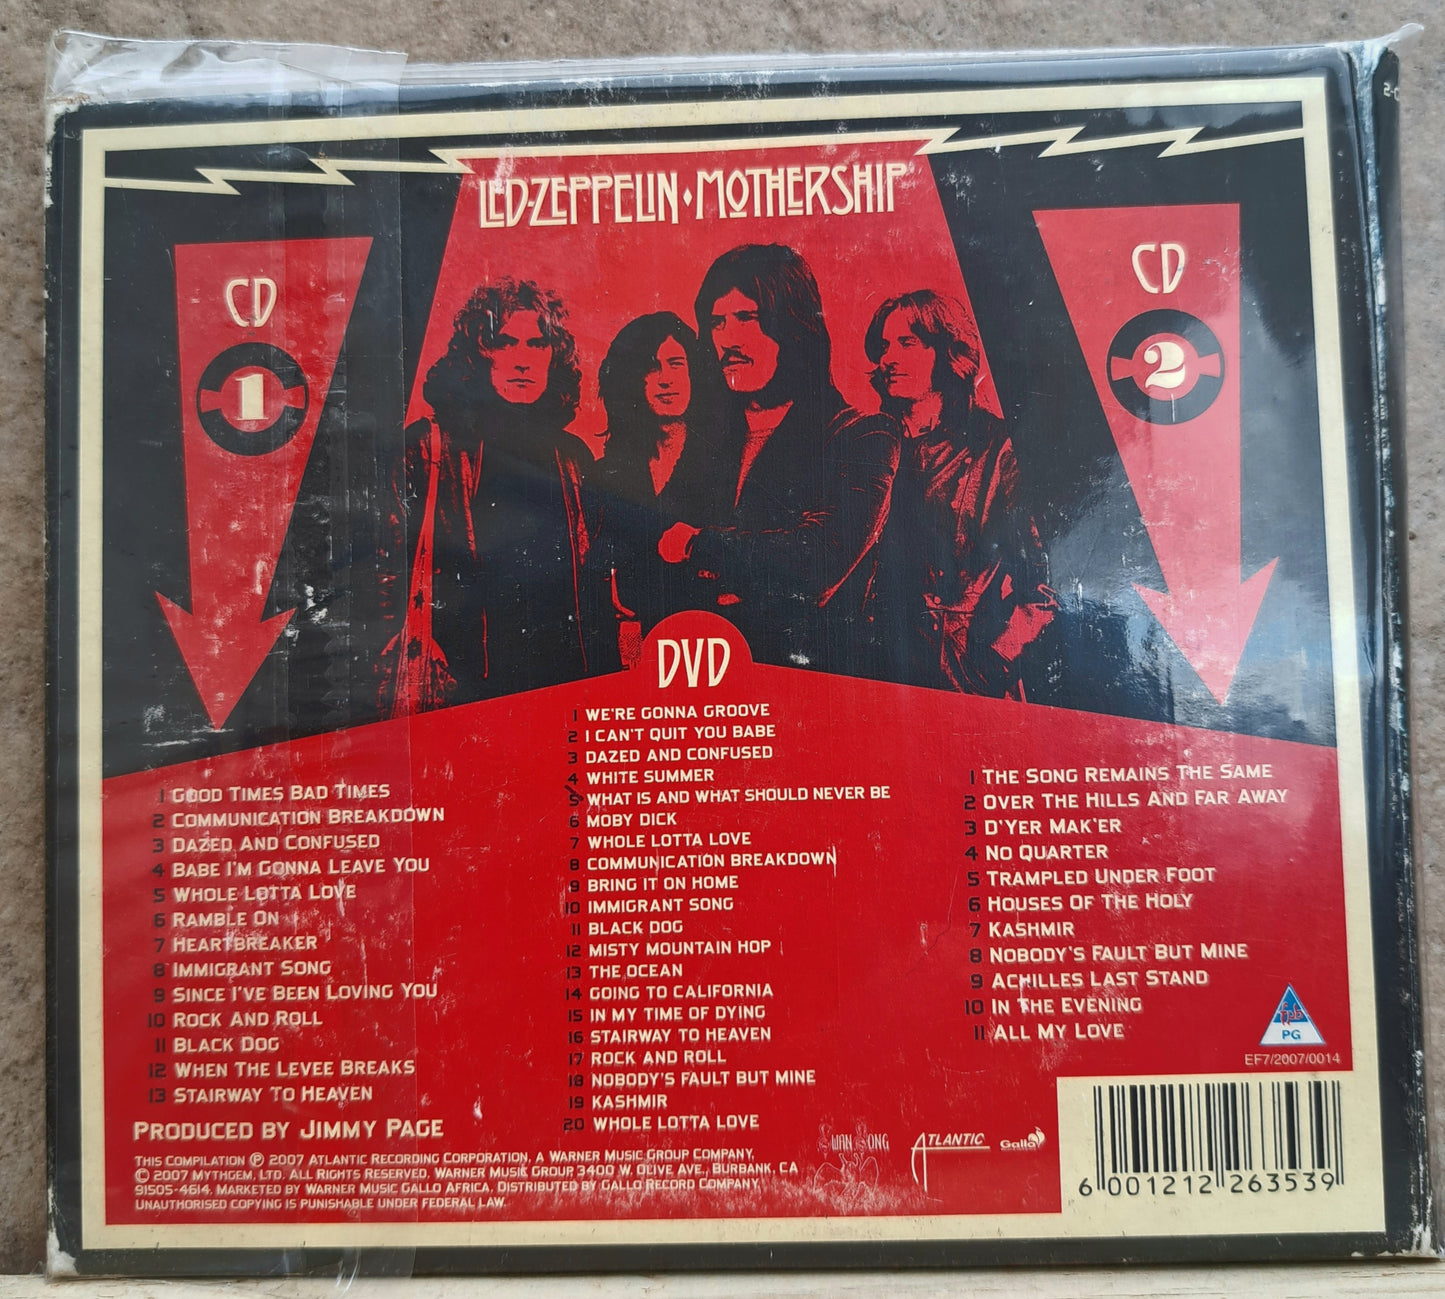 Led Zeppelin - Mothership (double cd/dvd combo)